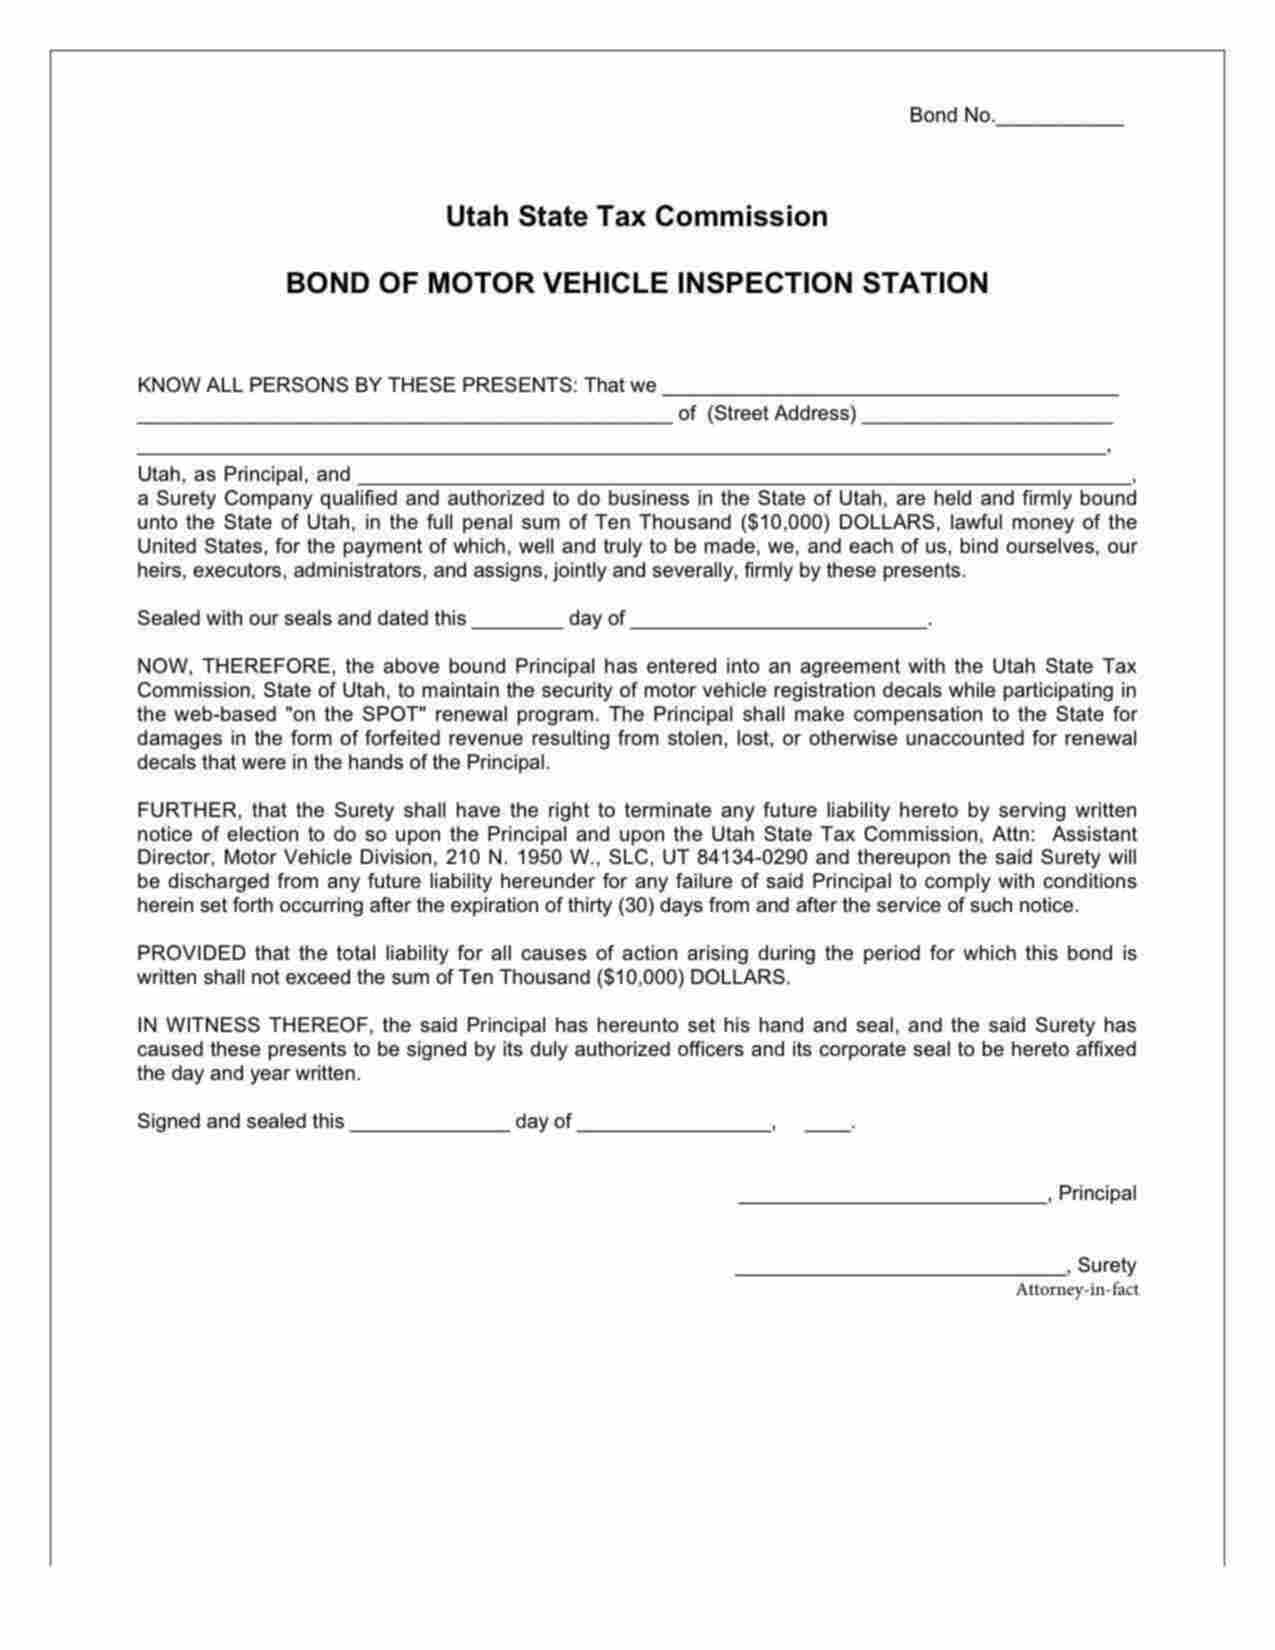 Utah Motor Vehicle Inspection Station "on the SPOT" Renewal Program Bond Form